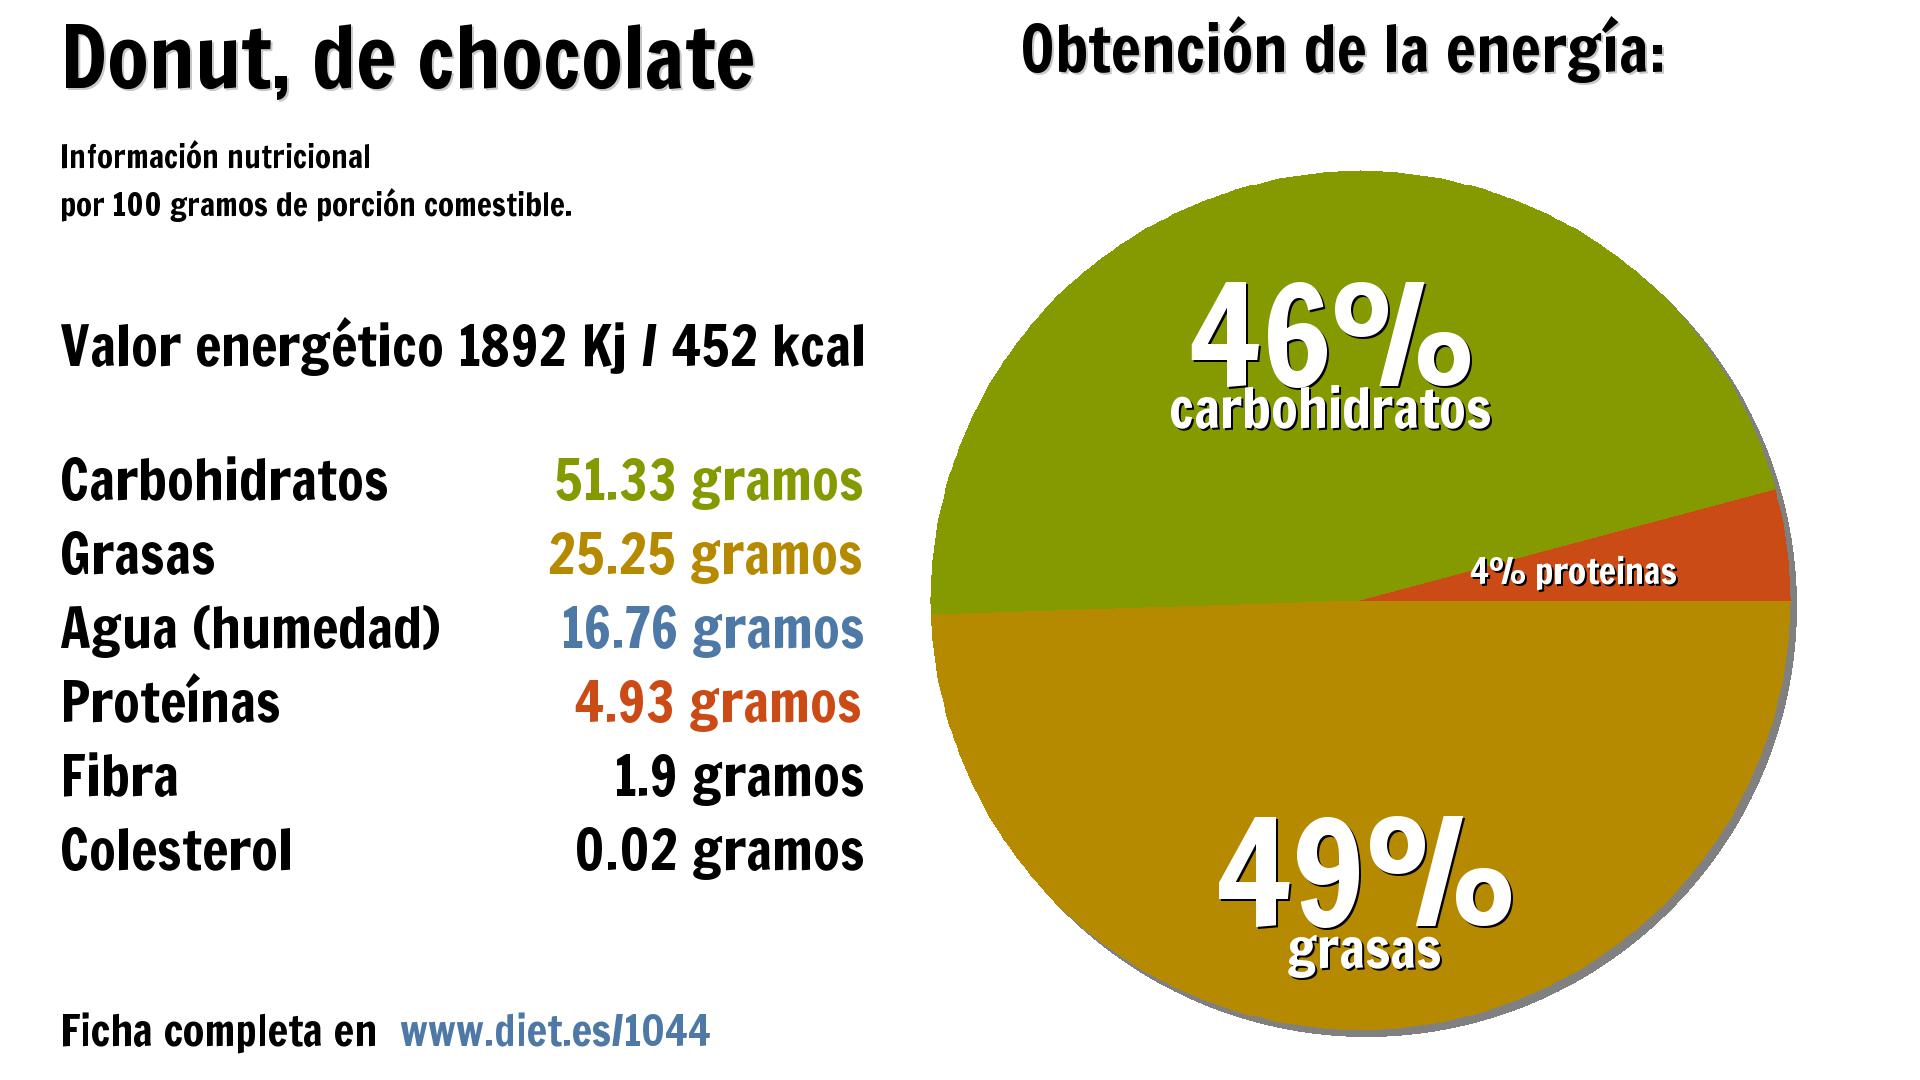 Donut, de chocolate: energía 1892 Kj, carbohidratos 51 g., grasas 25 g., agua 17 g., proteínas 5 g. y fibra 2 g.